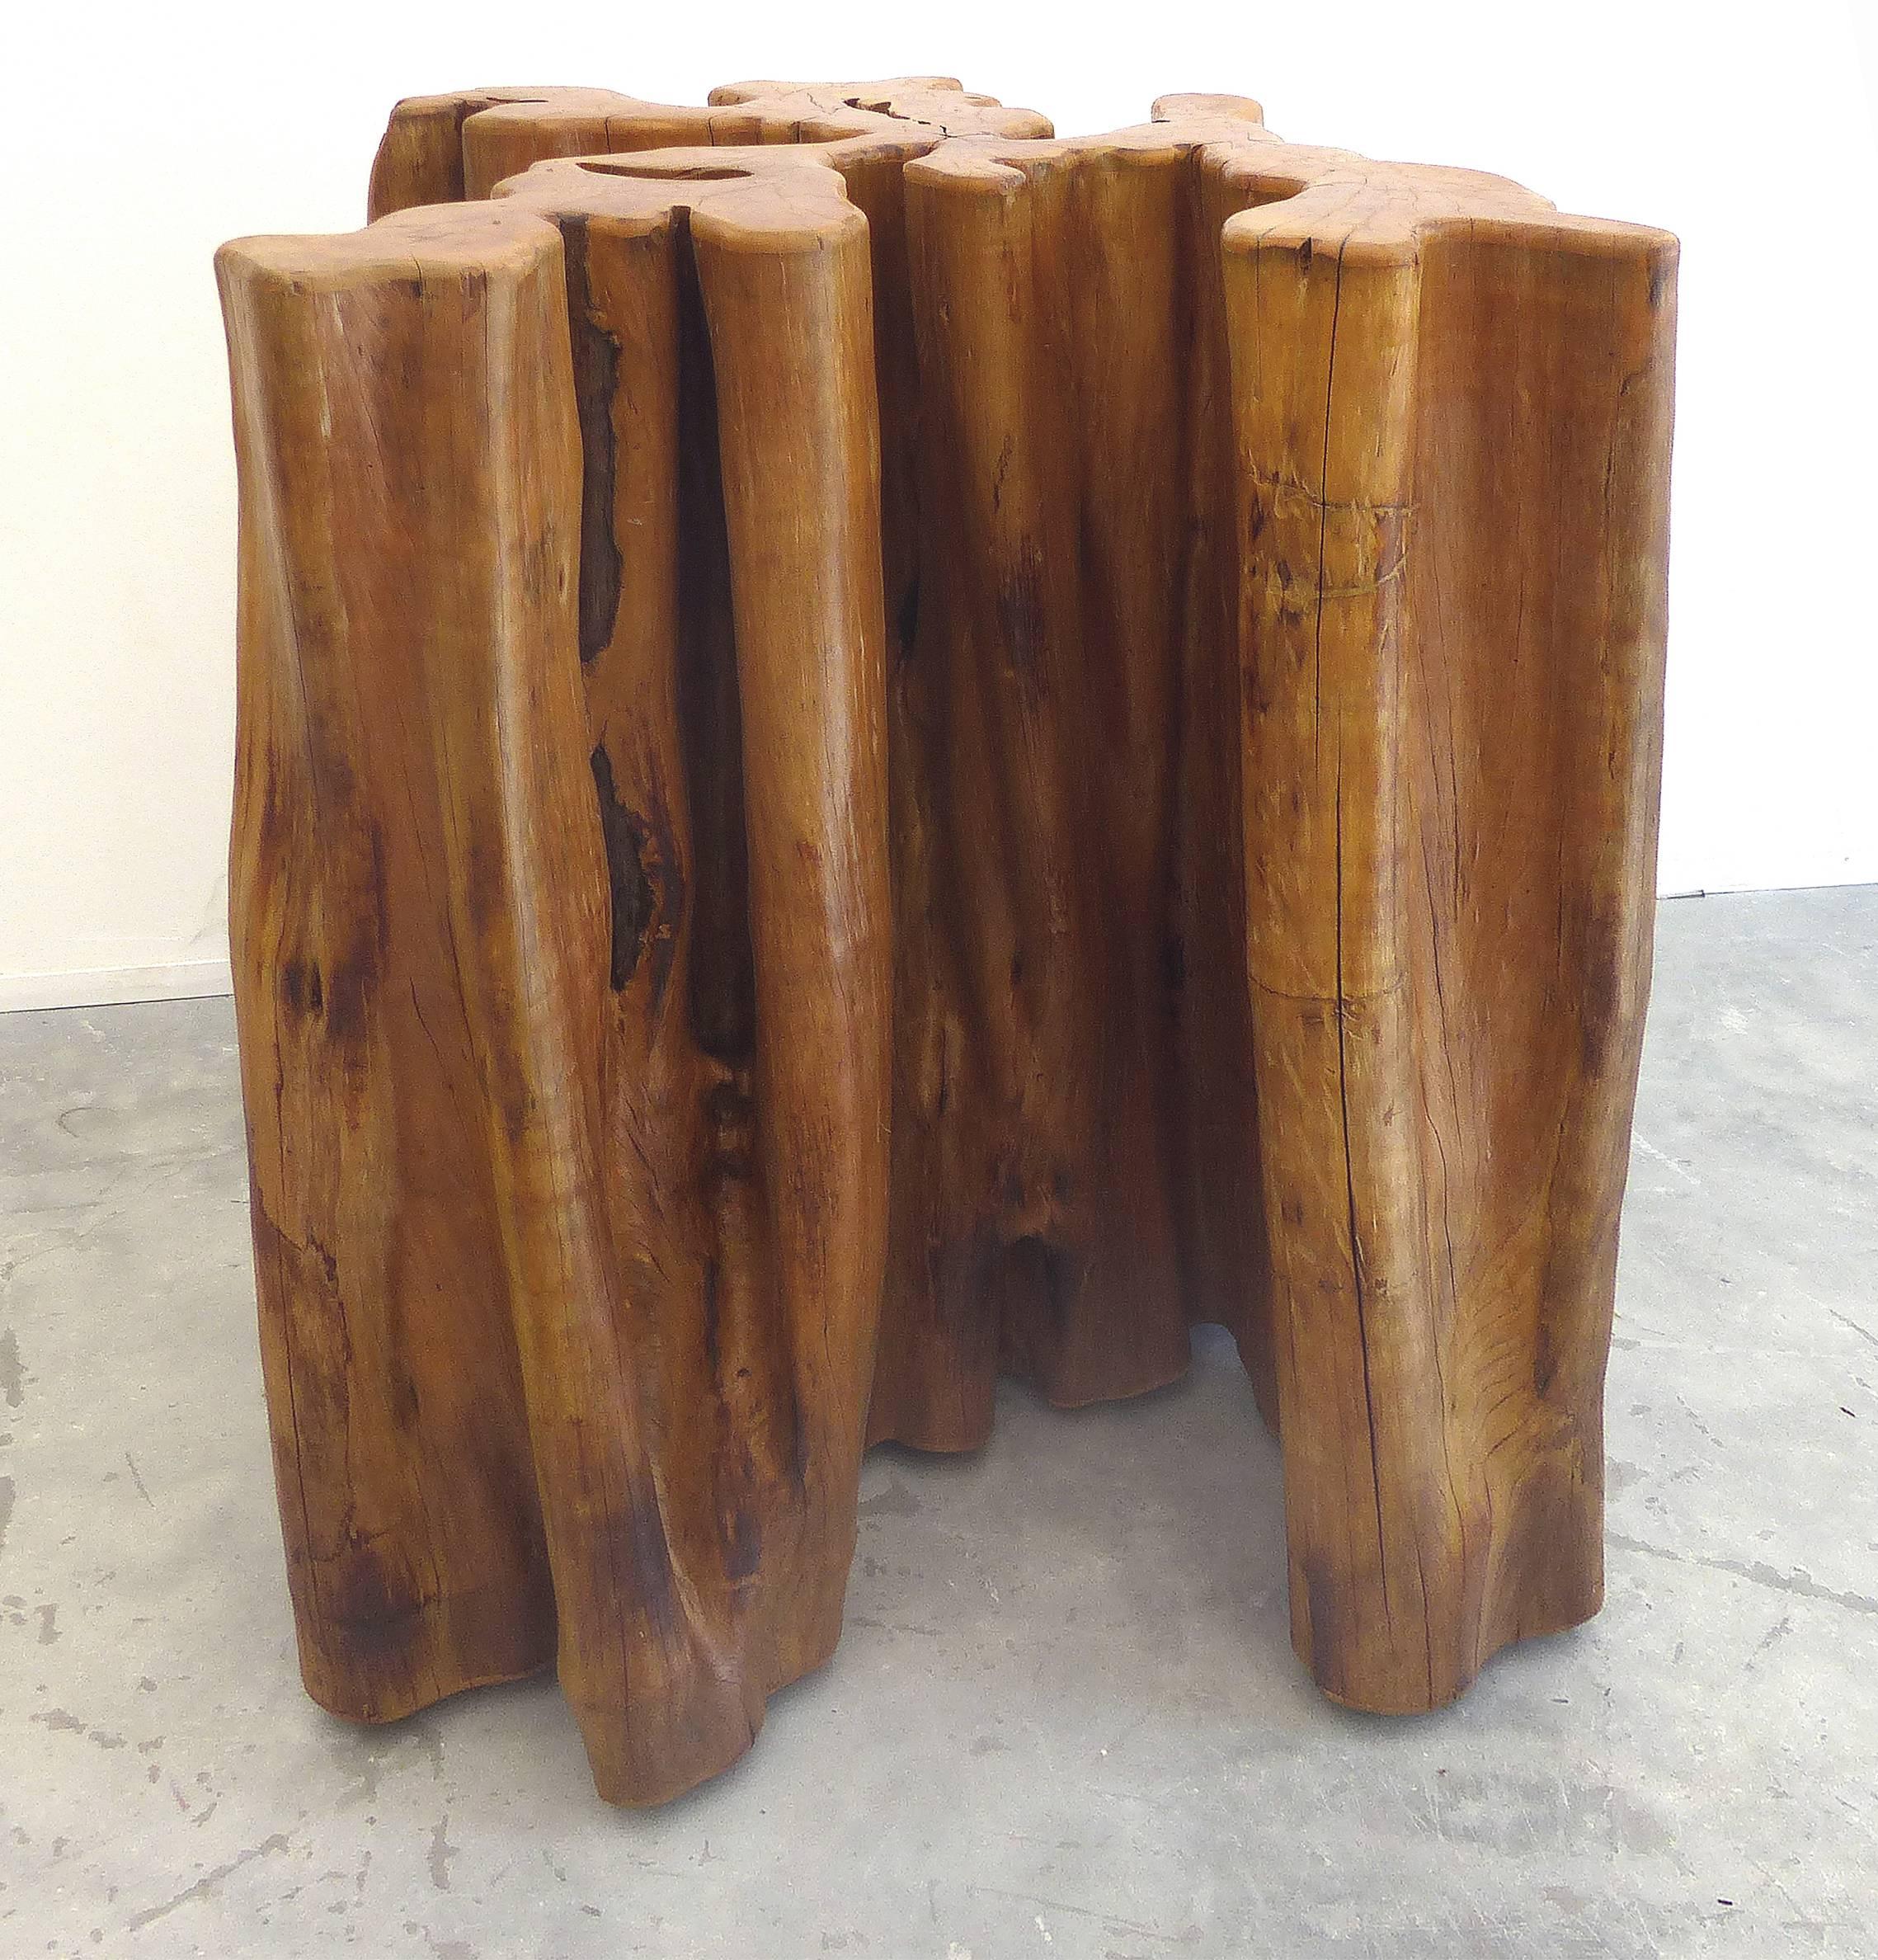 Organic Modern Sculptural Amazon Guaranta Table Base from Brazilian Artist Valeria Totti